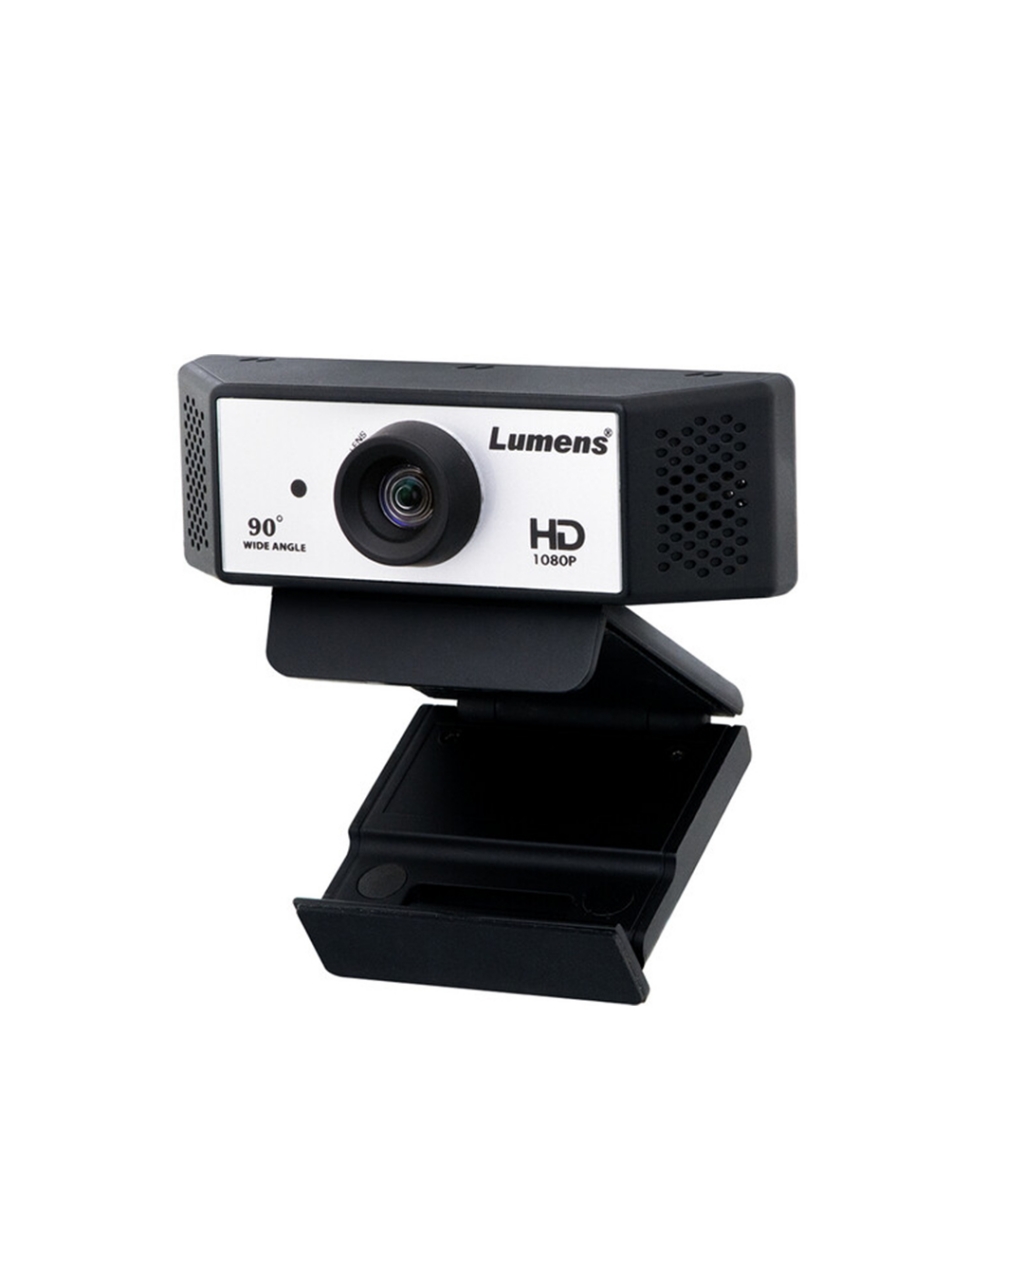 VC-B2U HD 1080p Video Conferencing Webcam